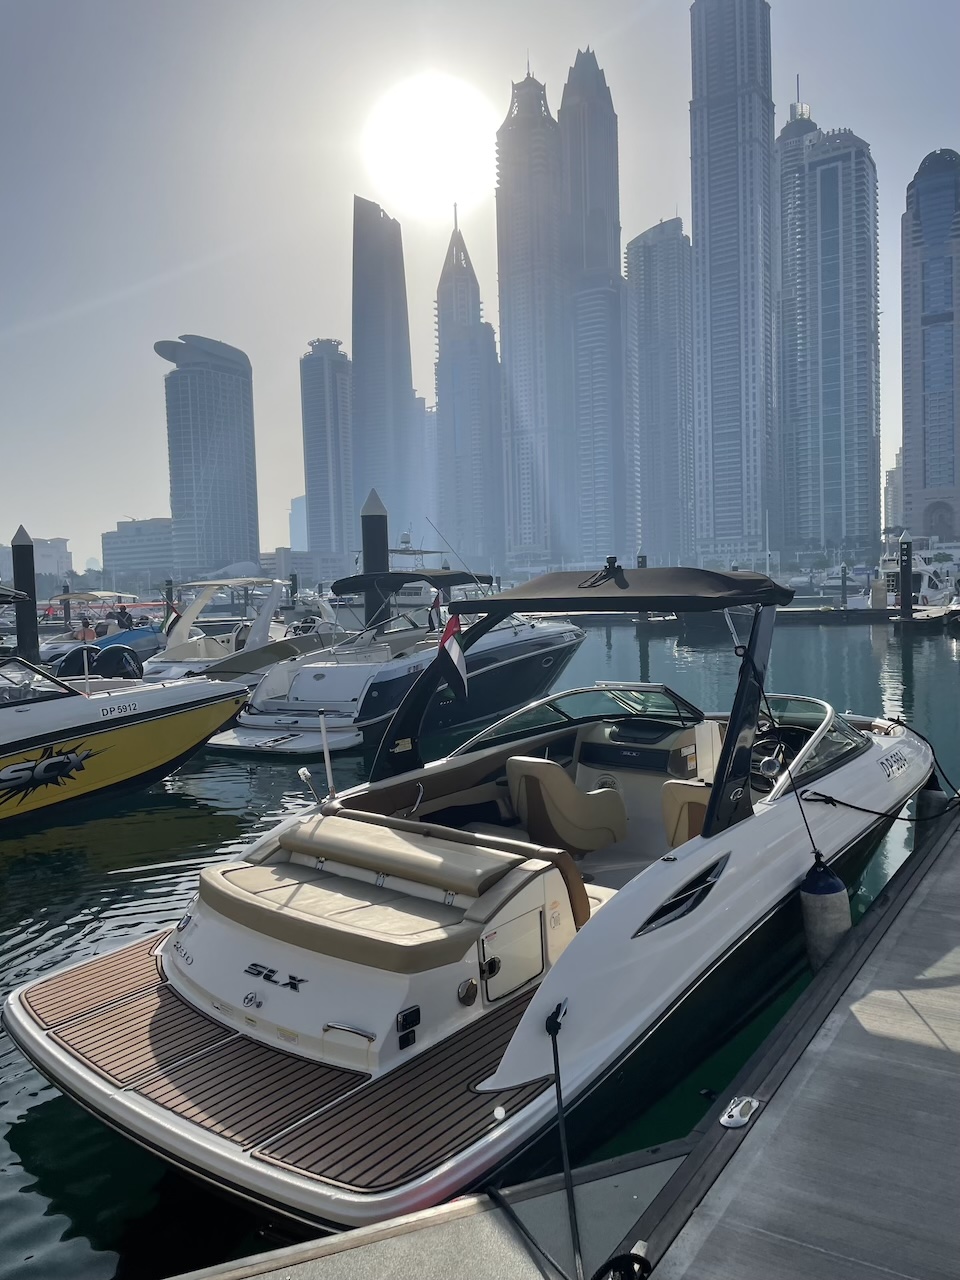 Moonlit cruises: Nighttime magic on the waters of Dubai